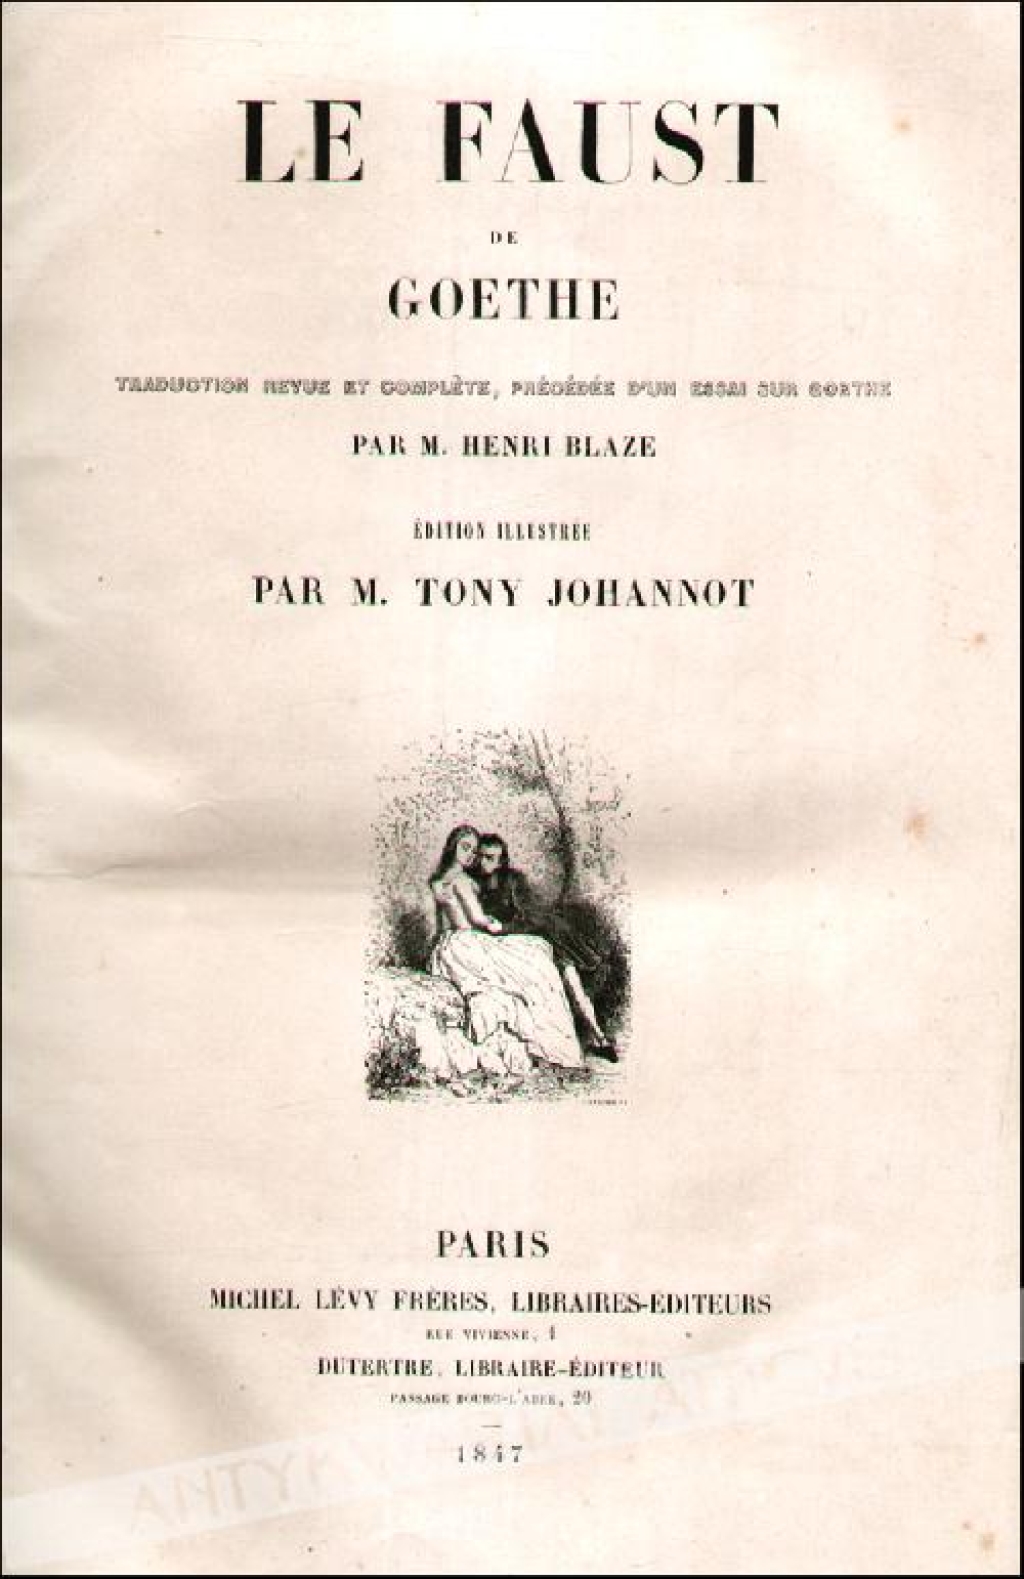 Le Faust [Edition Illustree par M. Tony Johannot]